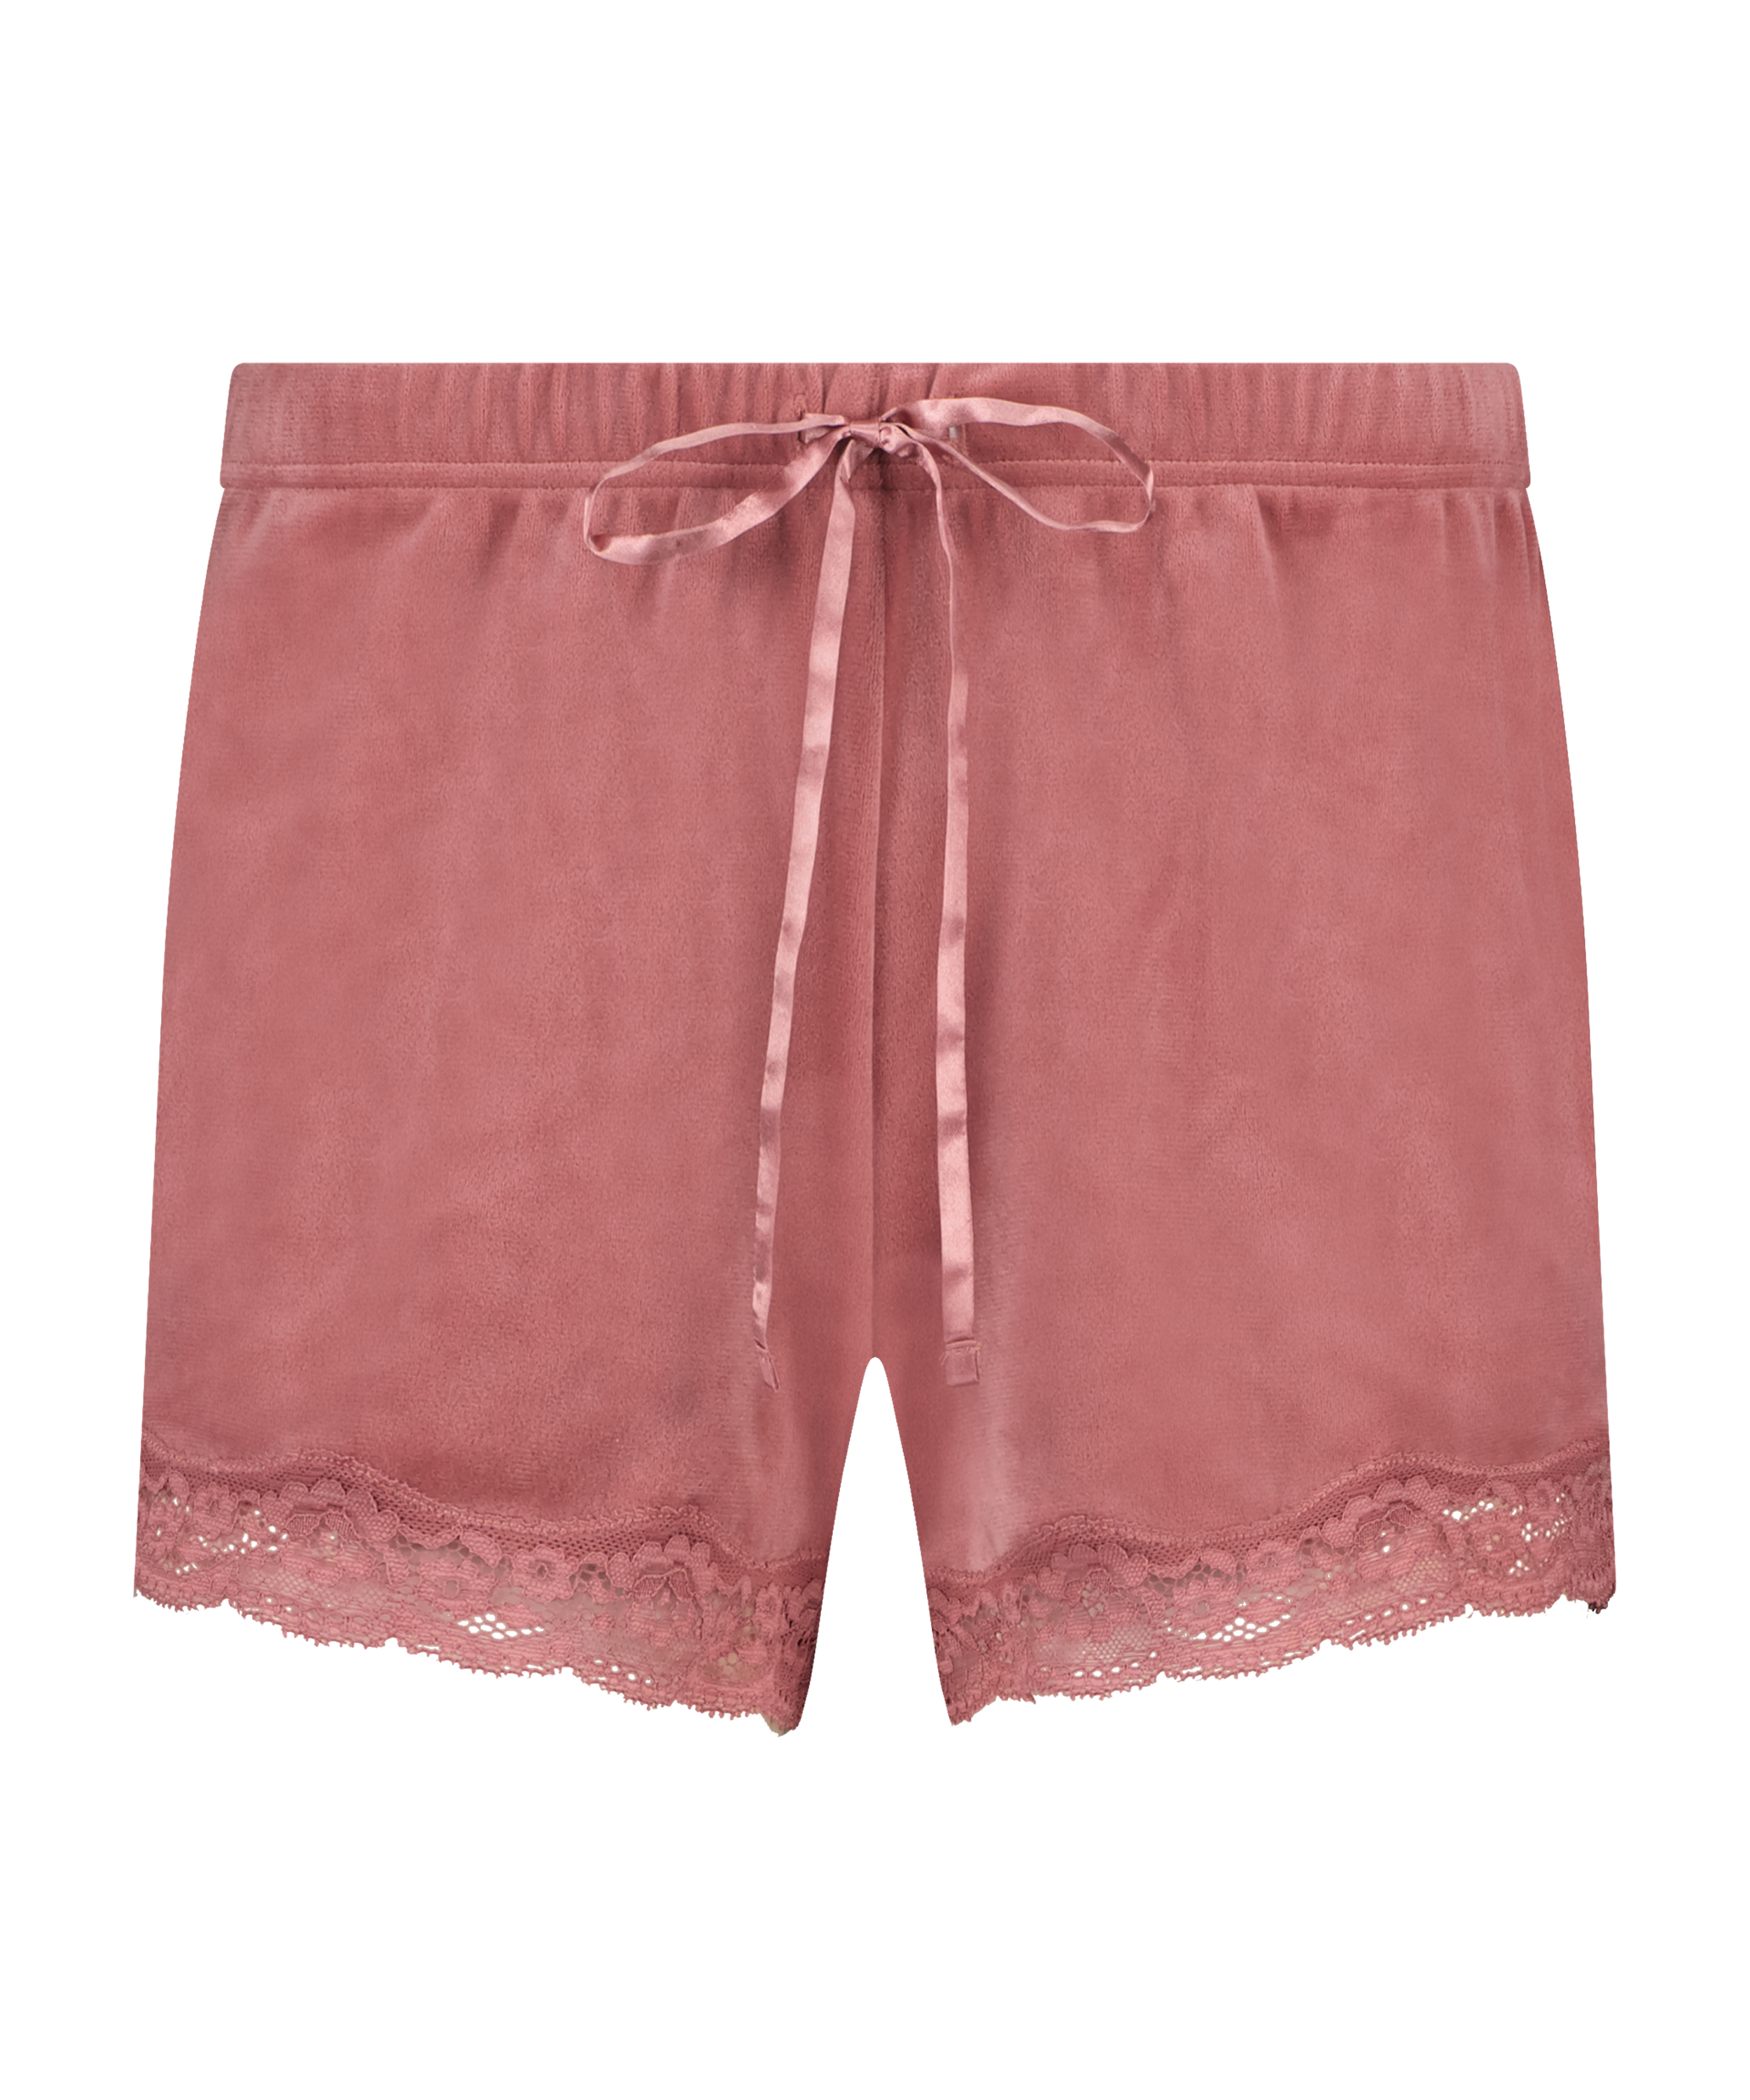 Velvet lace shorts, Pink, main